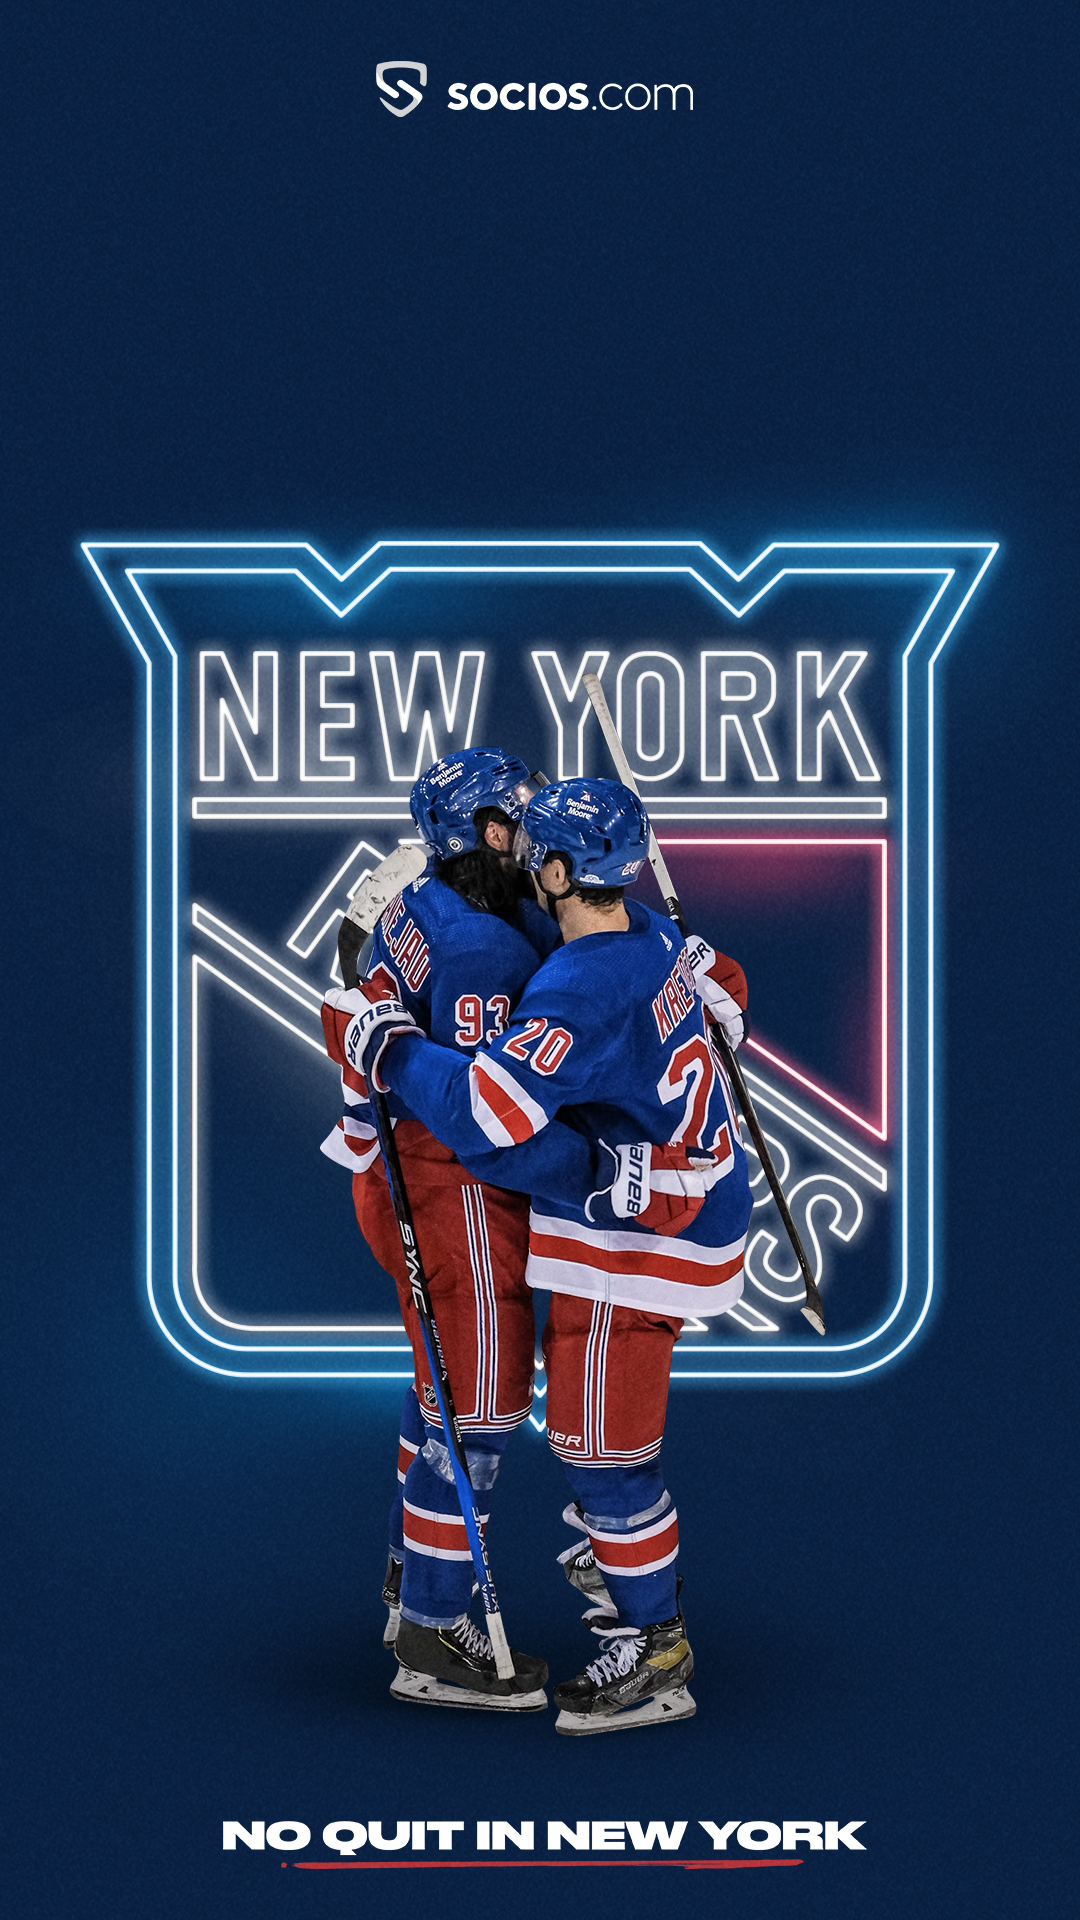 New York Rangers on X: No quit in your lockscreen. #WallpaperWednesday